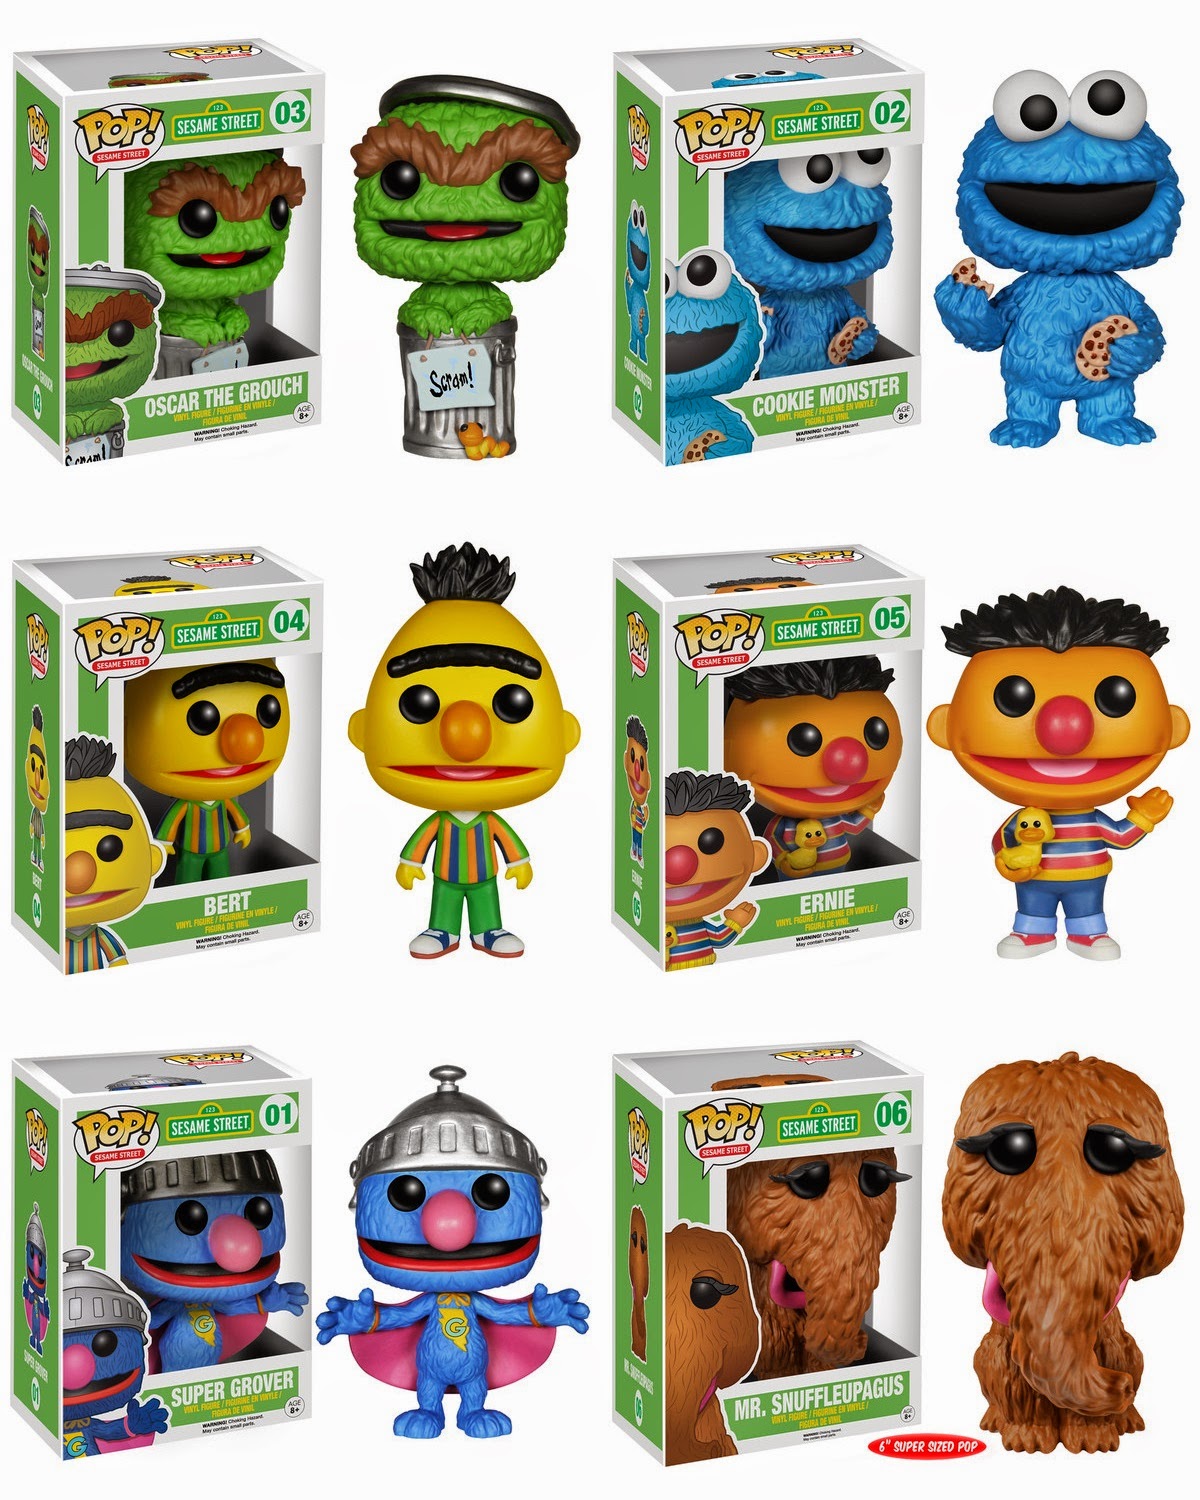 Sesame Street Pop! Series 1 Vinyl Figures by Funko - Oscar the Grouch, Cookie Monster, Bert, Ernie, Super Grover & Mr. Snuffleupagus